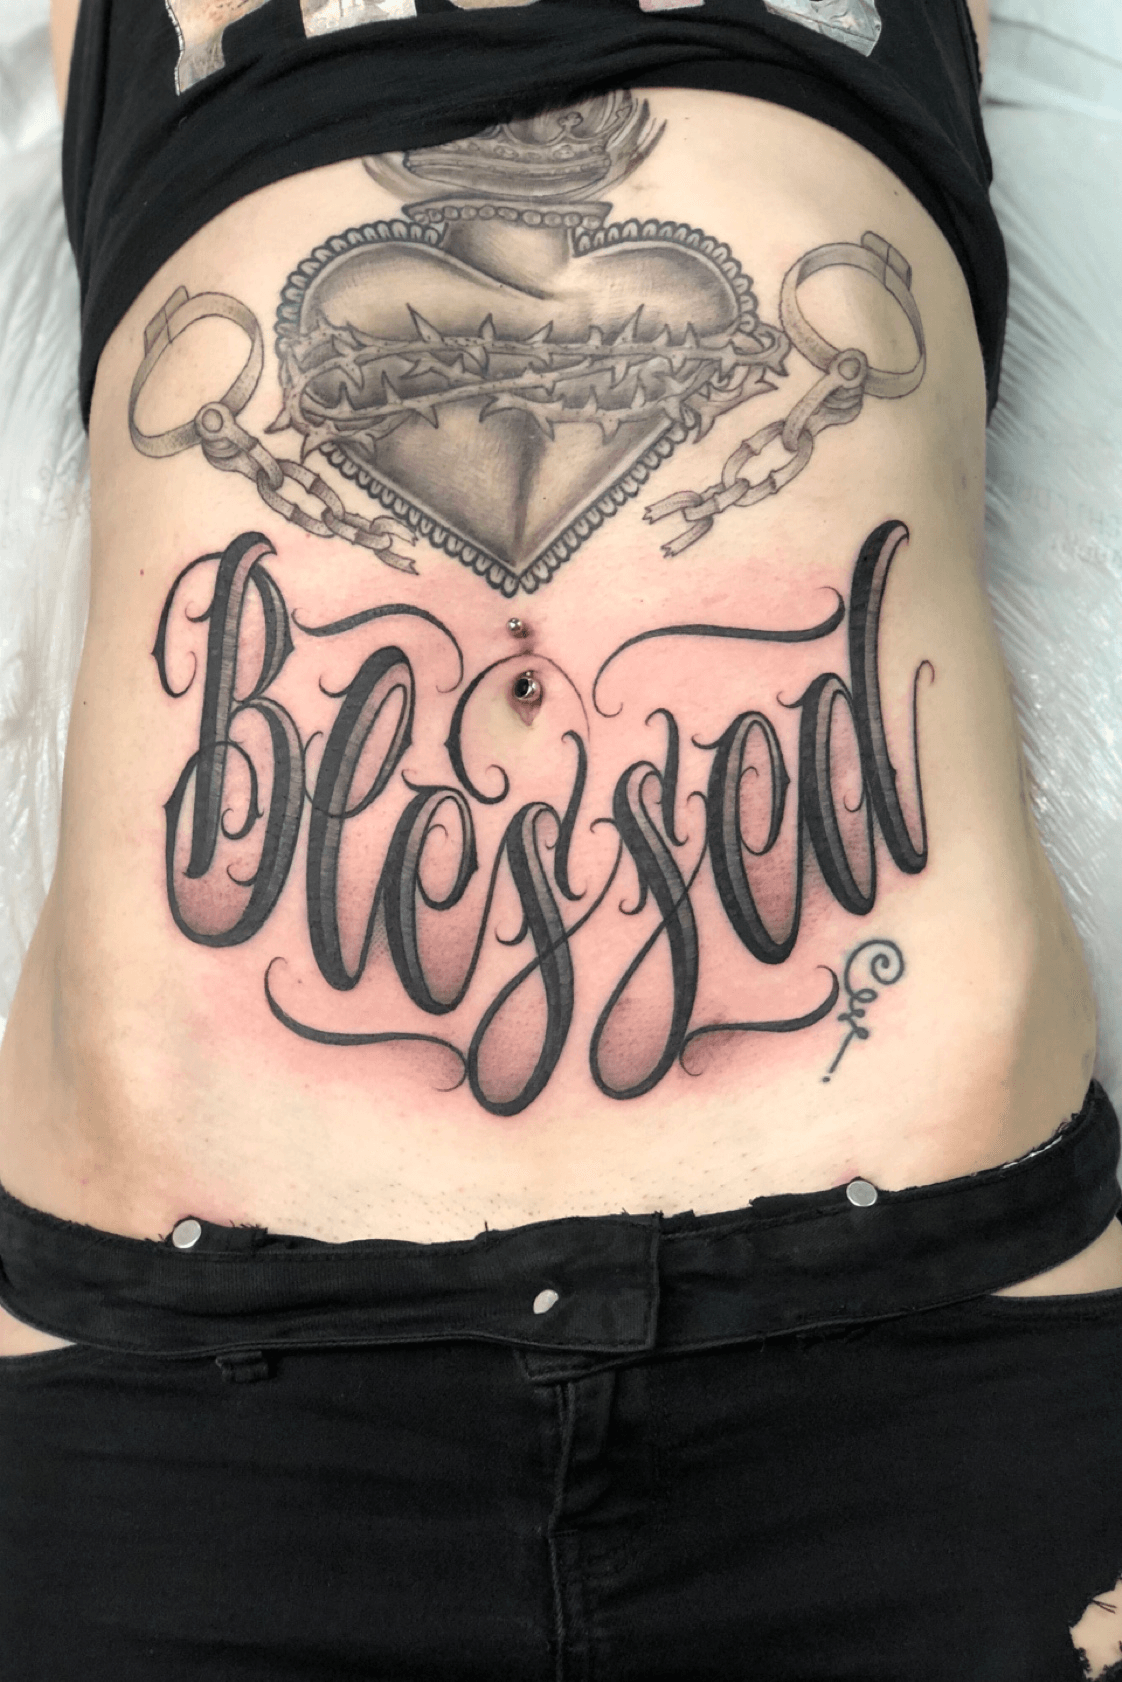 60 Blessed Tattoos For Men  Biblical Lettering Design Ideas